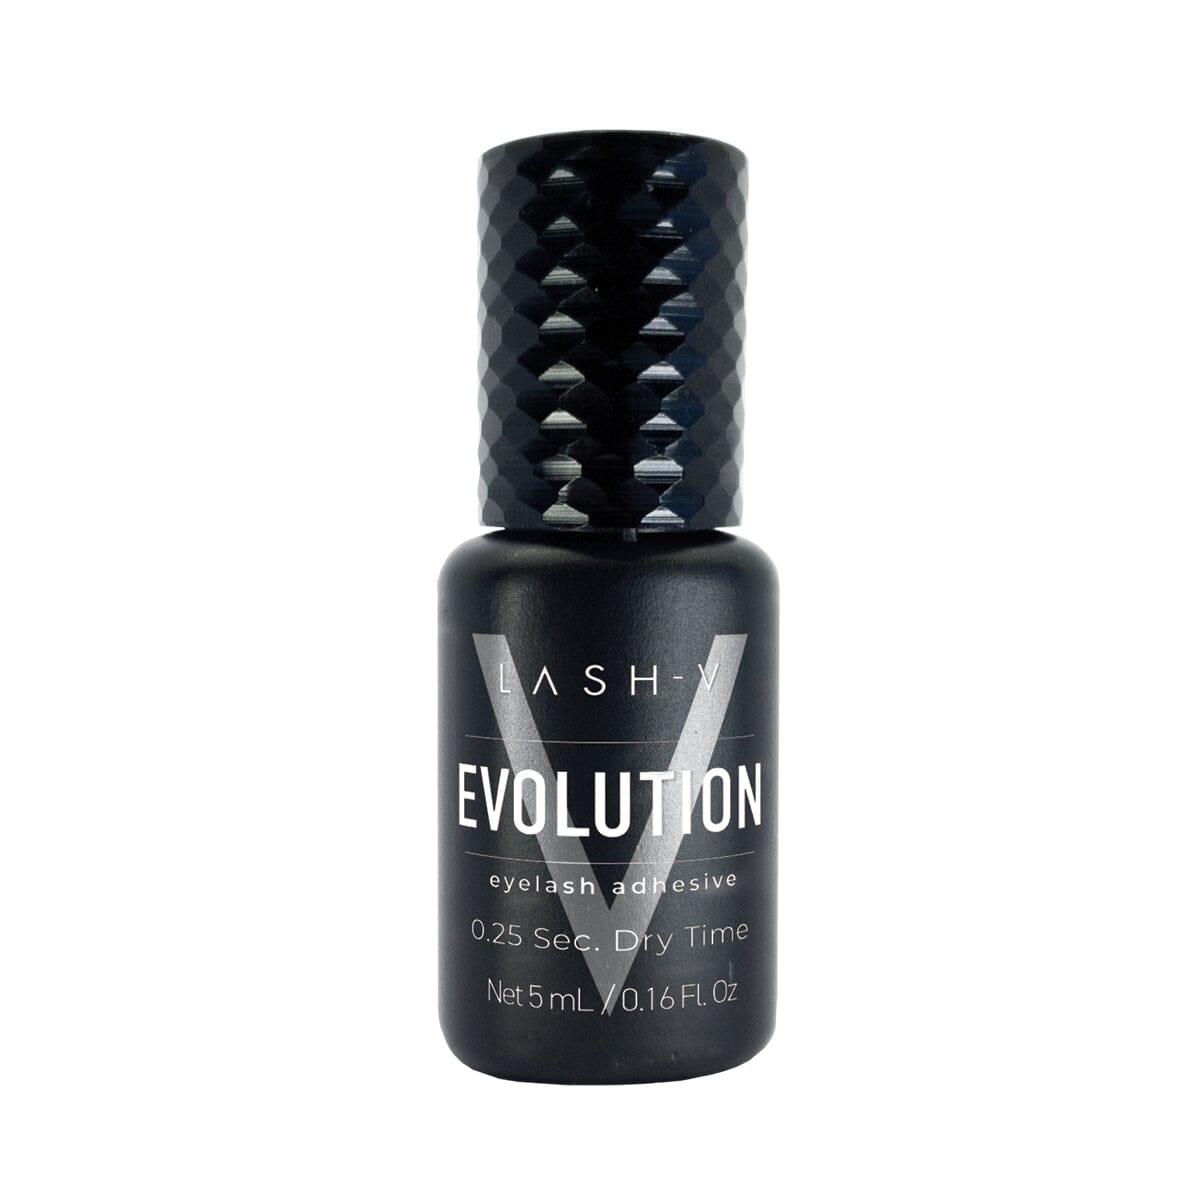 Evolution Super Fast Eyelash Adhesive - Best Lash Extensions Glue - Lash Supplies - LASH V